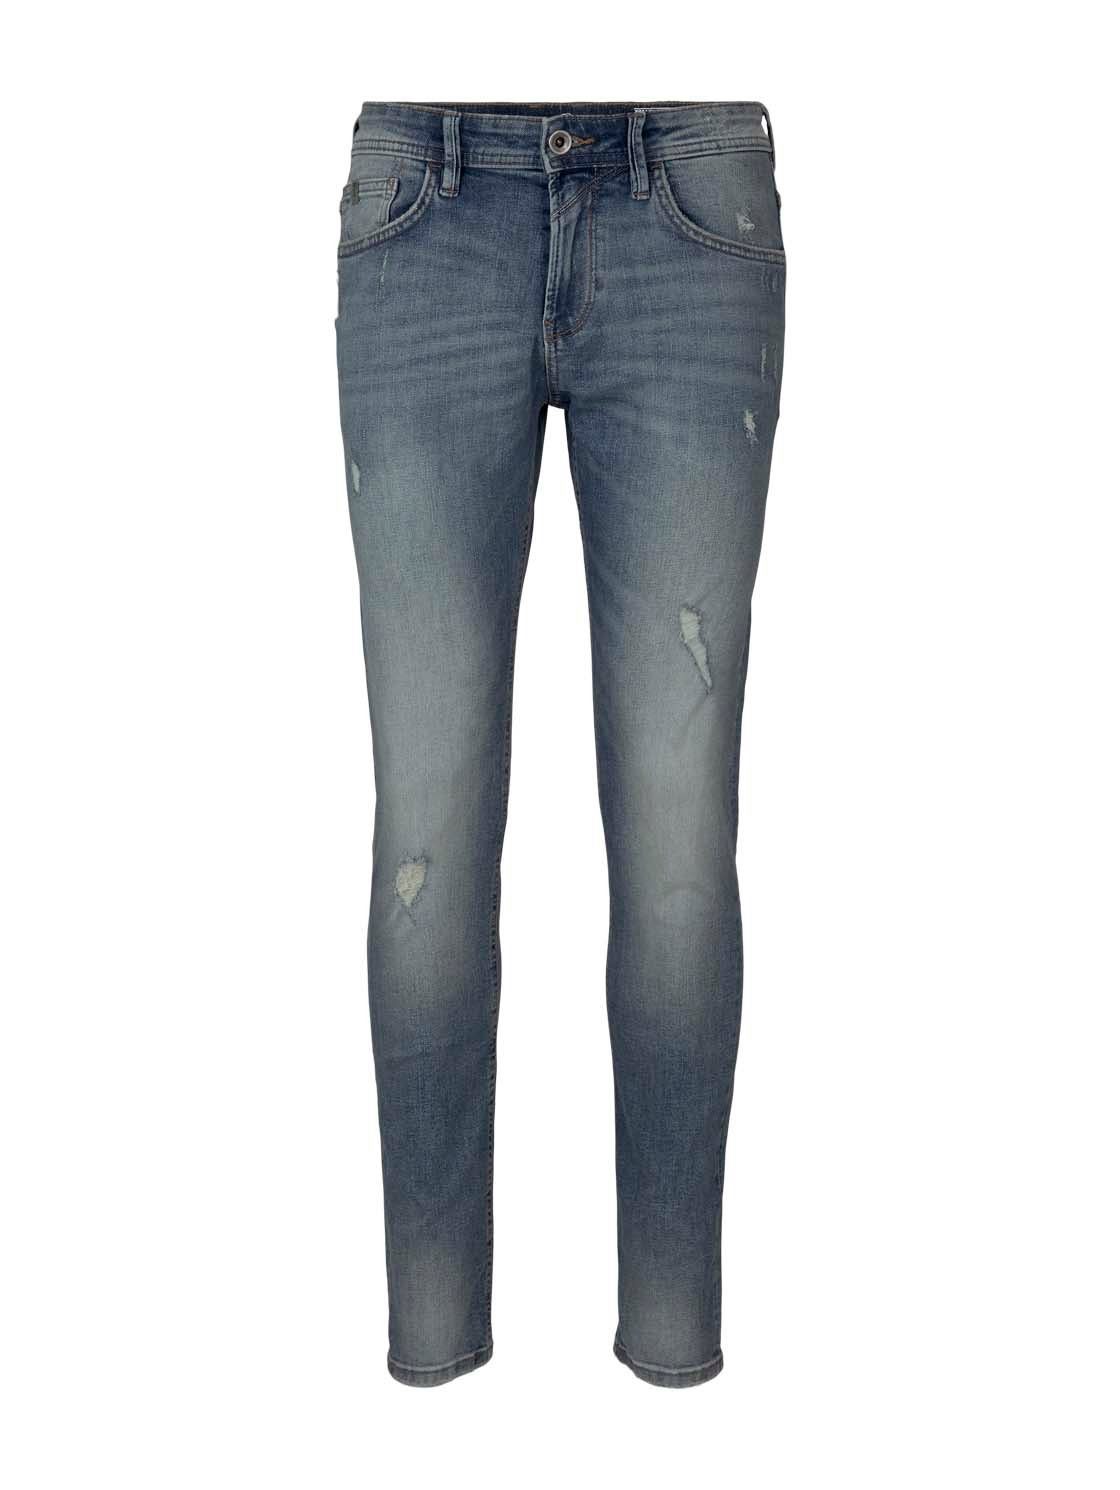 TOM TAILOR Denim Slim-fit-Jeans PIERS SLIM JEANS Jeanshose mit Stretch | Slim-Fit Jeans